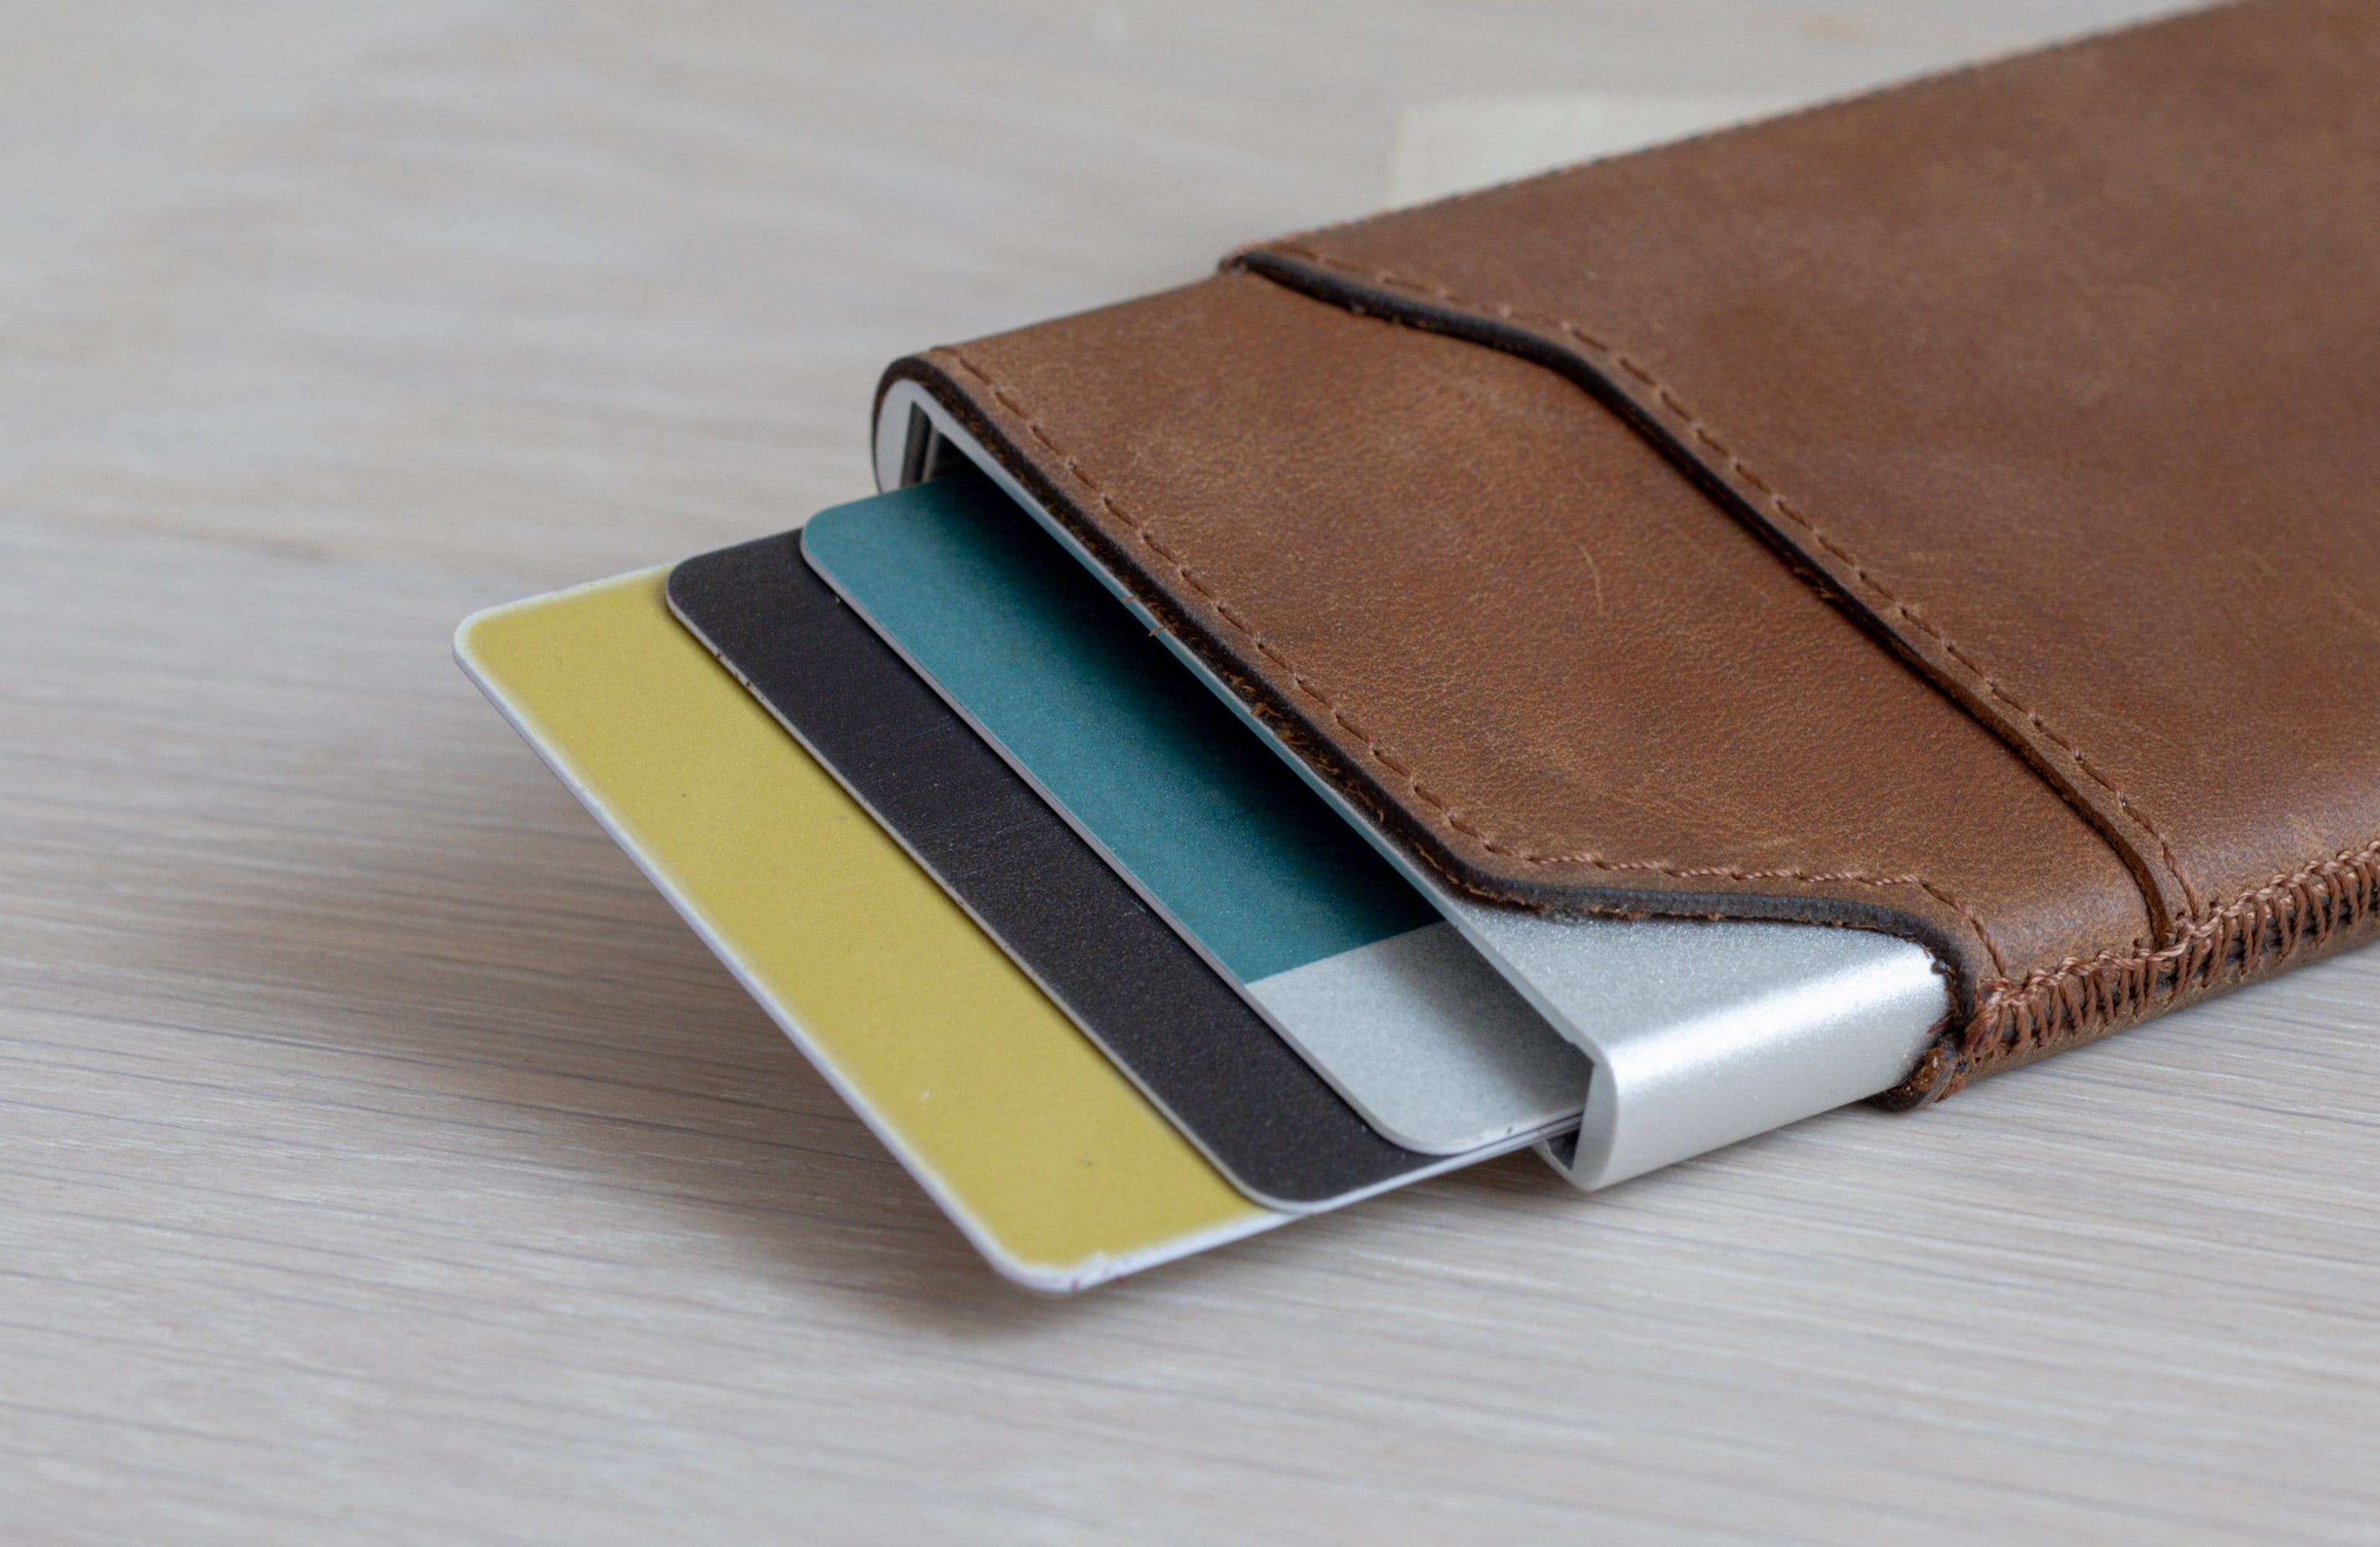 Flat Leather Credit Card Wallet 4 CC - Black